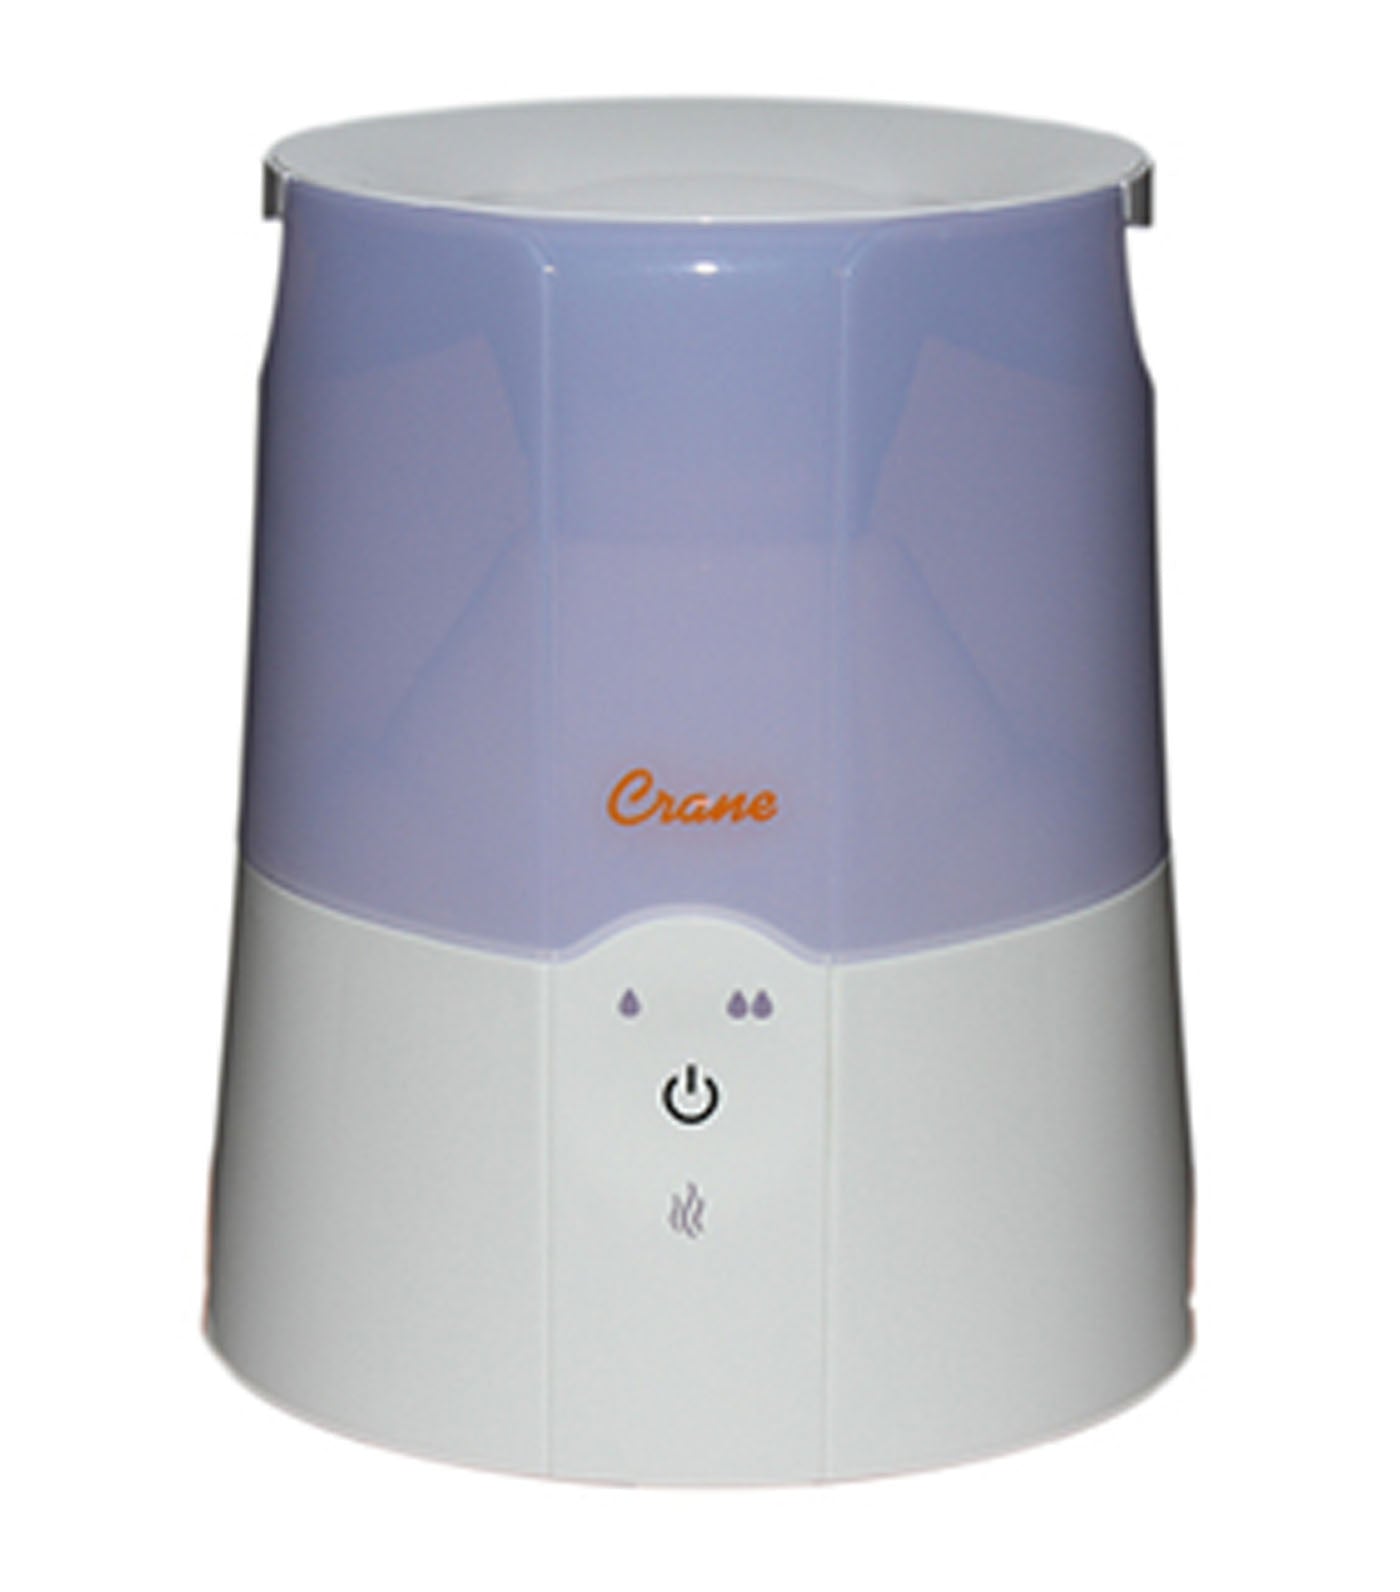 crane 2-in-1 warm mist humidifier and personal steam inhaler - white